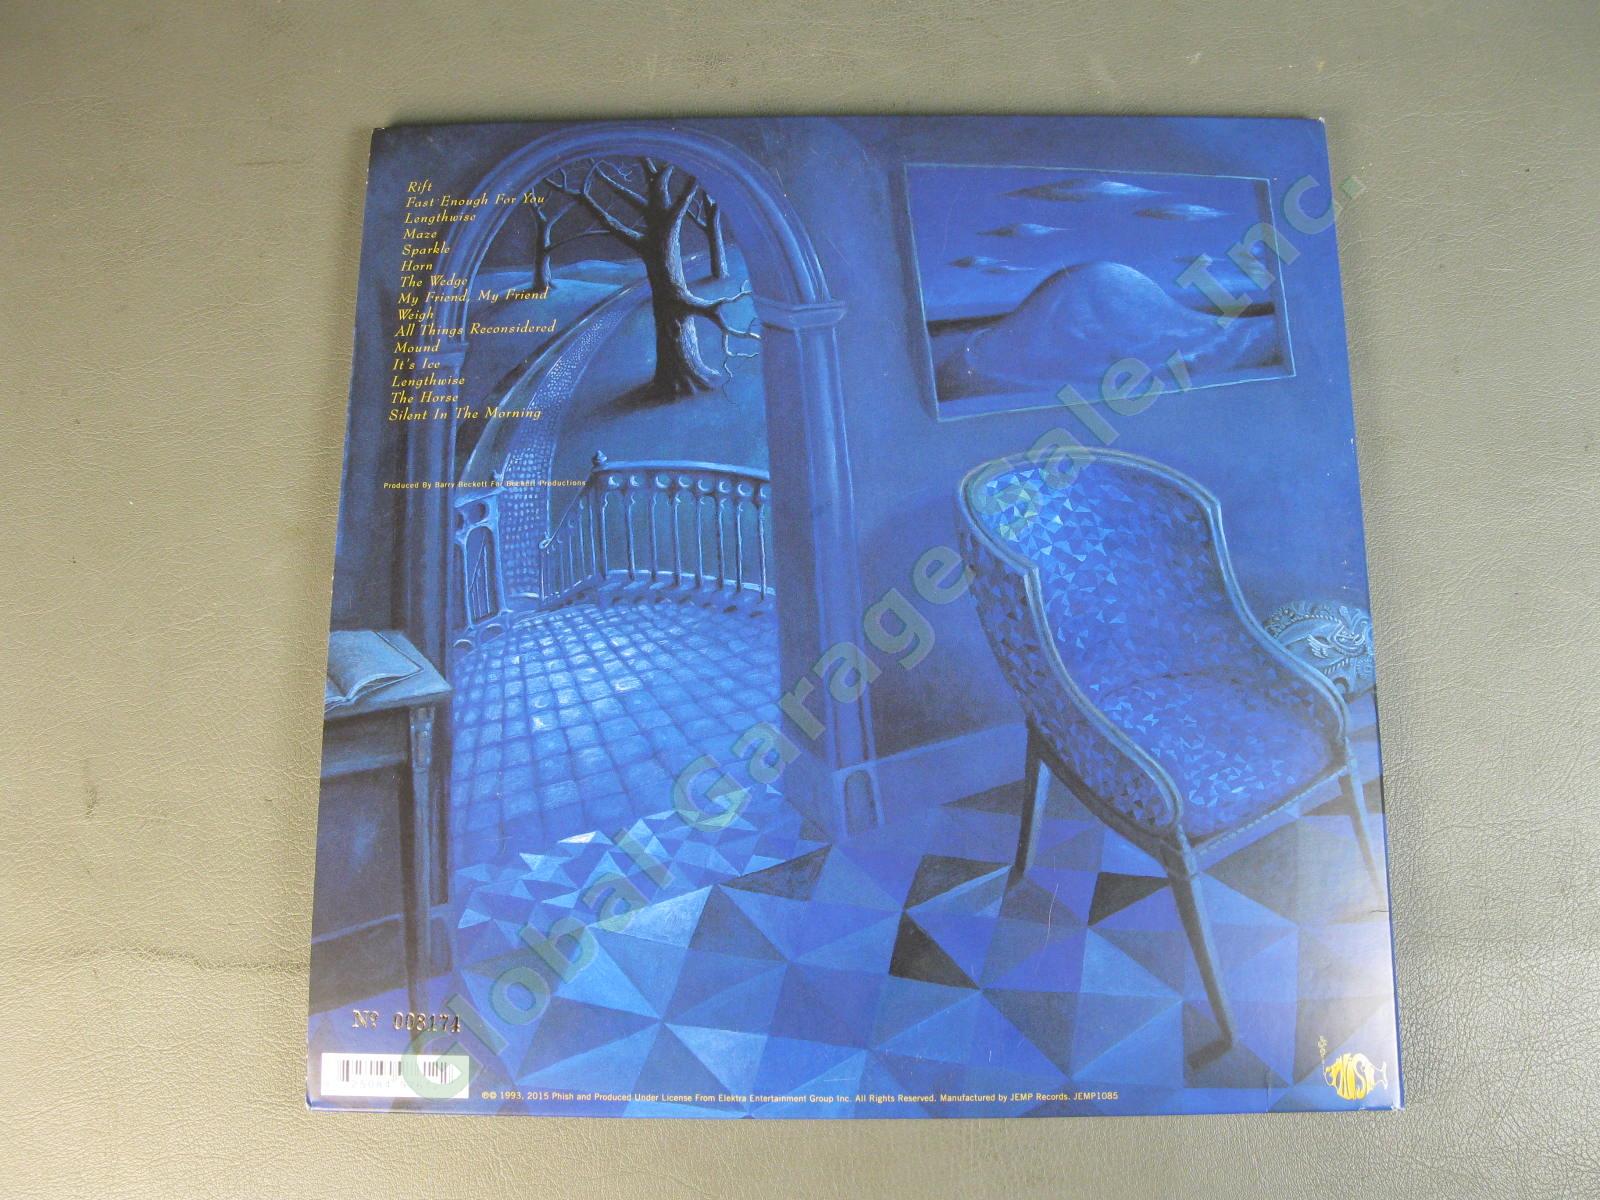 2015 PHISH Limited Edition Rift LP Record Album #8174 Welker Print Jemp1085 NR 2